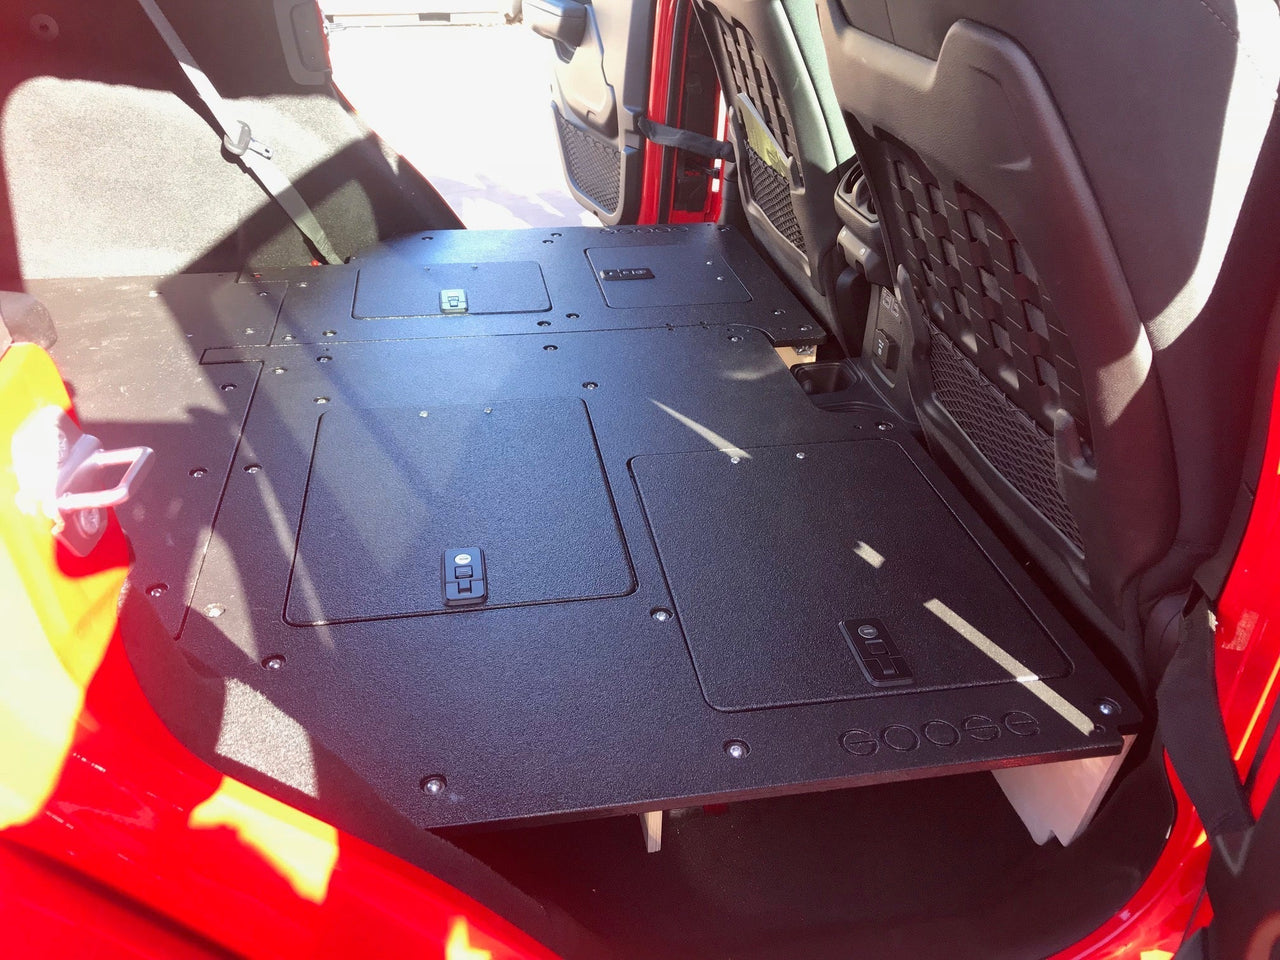 GOOSE GEAR Jeep Wrangler 2018-Present JLU 4 Door - Second Row Seat Delete Plate System